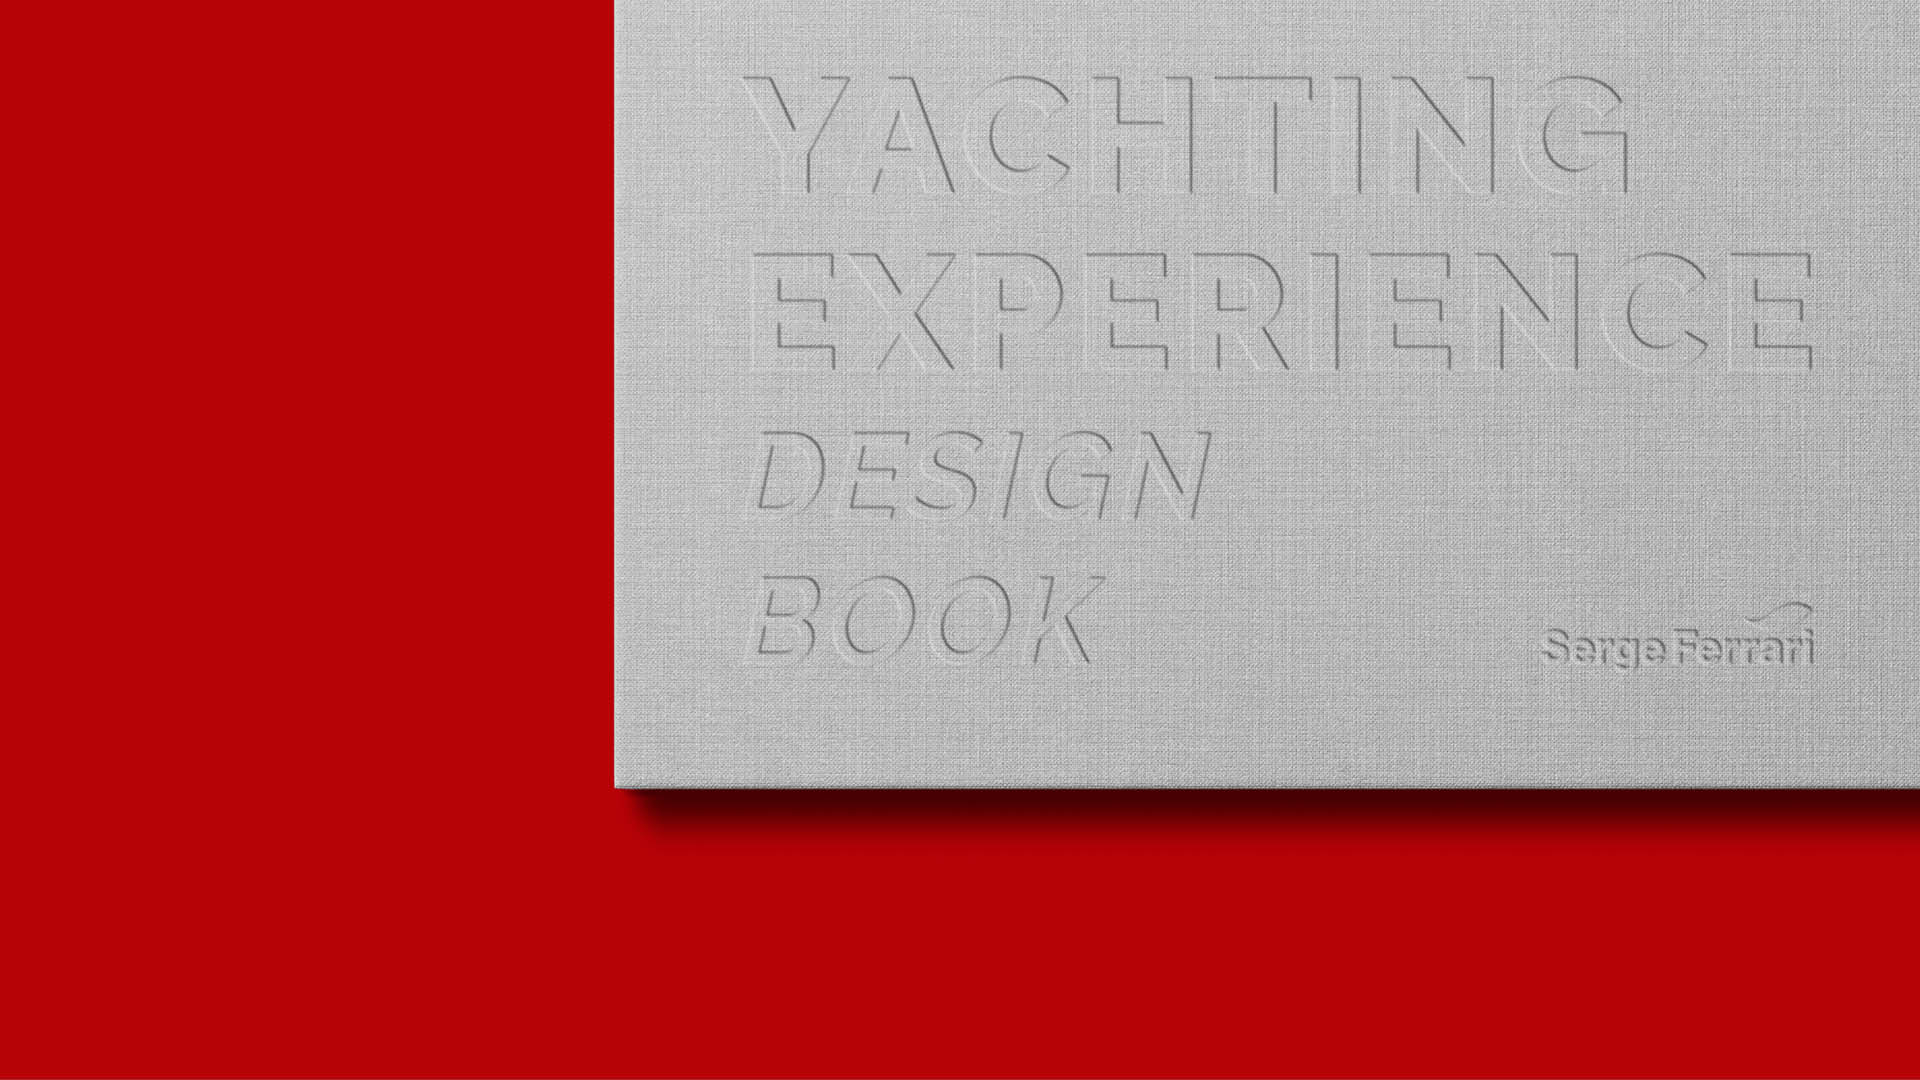 Yachting Experience Design Book pour Serge Ferrari